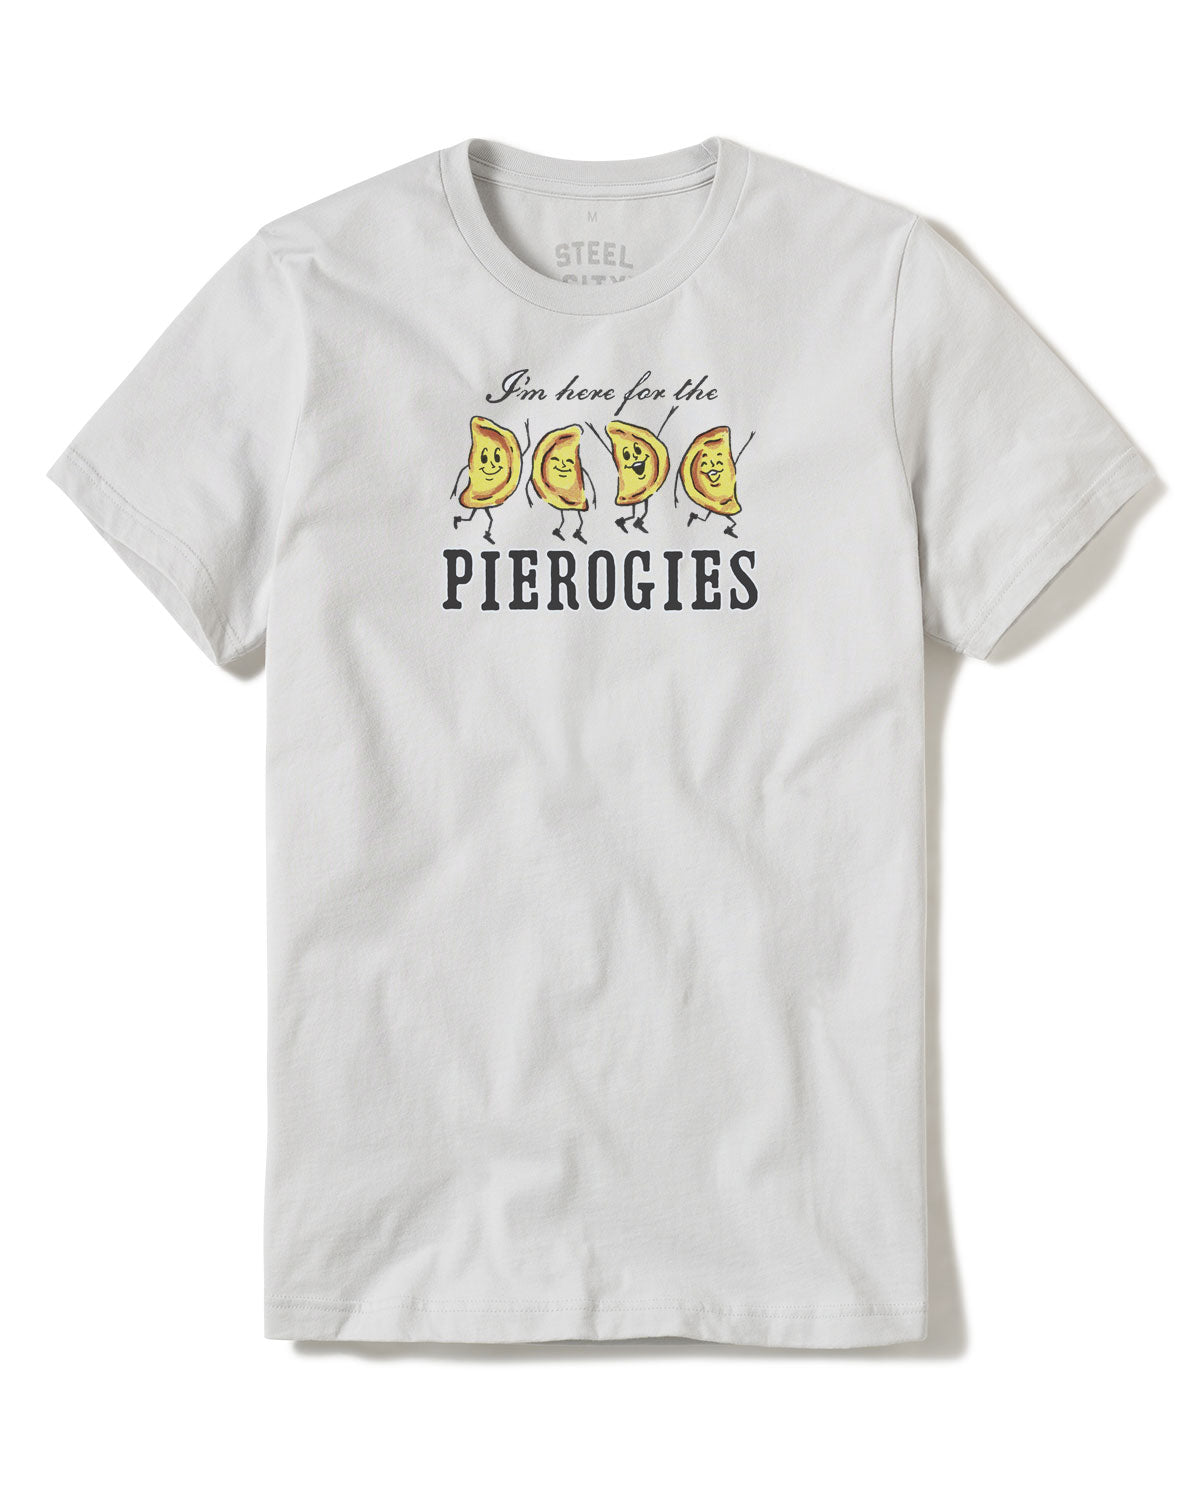 Pittsburgh Pierogi Essential T-Shirt for Sale by akachayy